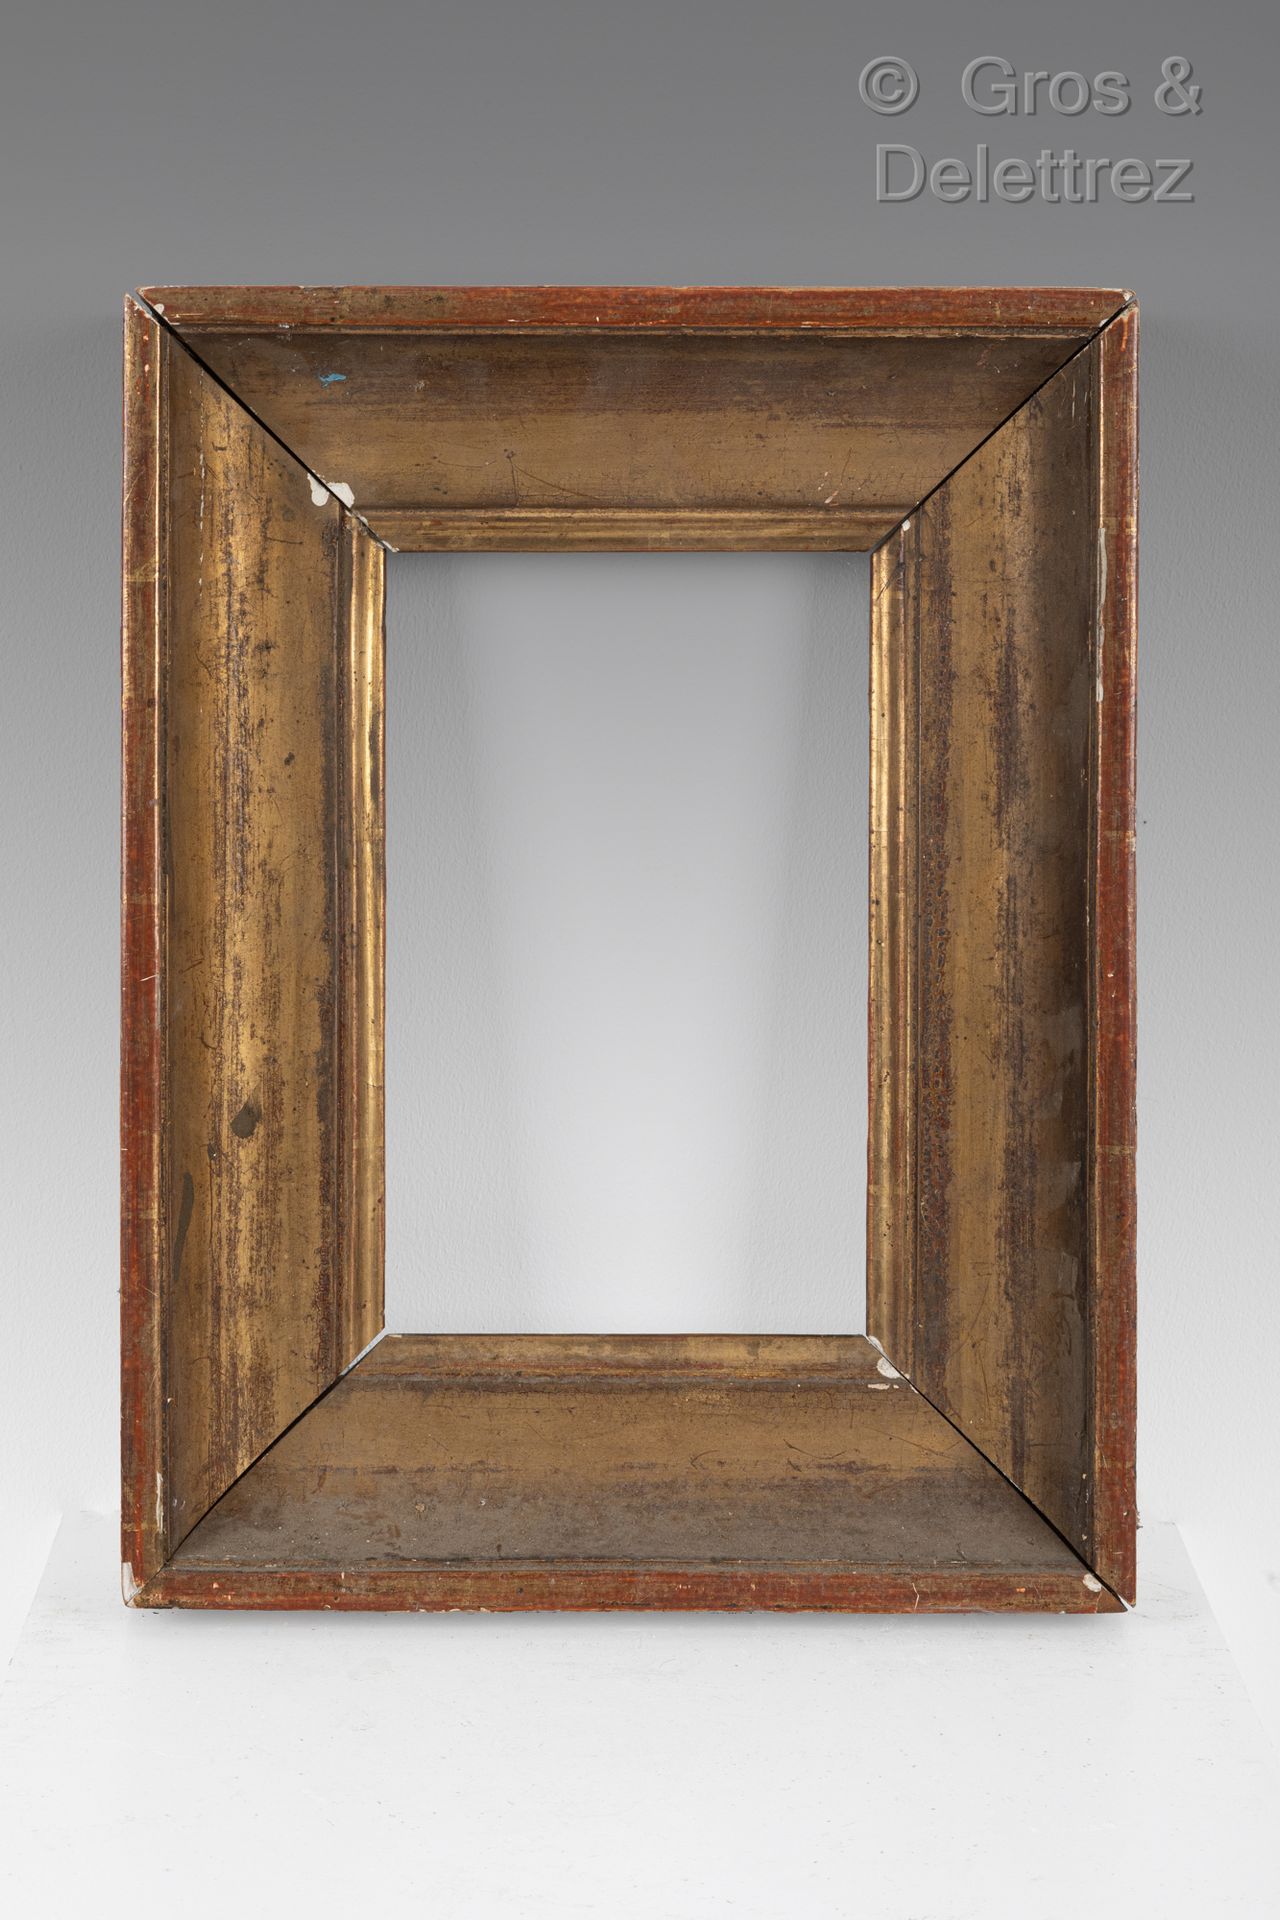 Null Garganta de madera moldeada y dorada.

Siglo XIX

12,2 x 25 x 6,5 cm